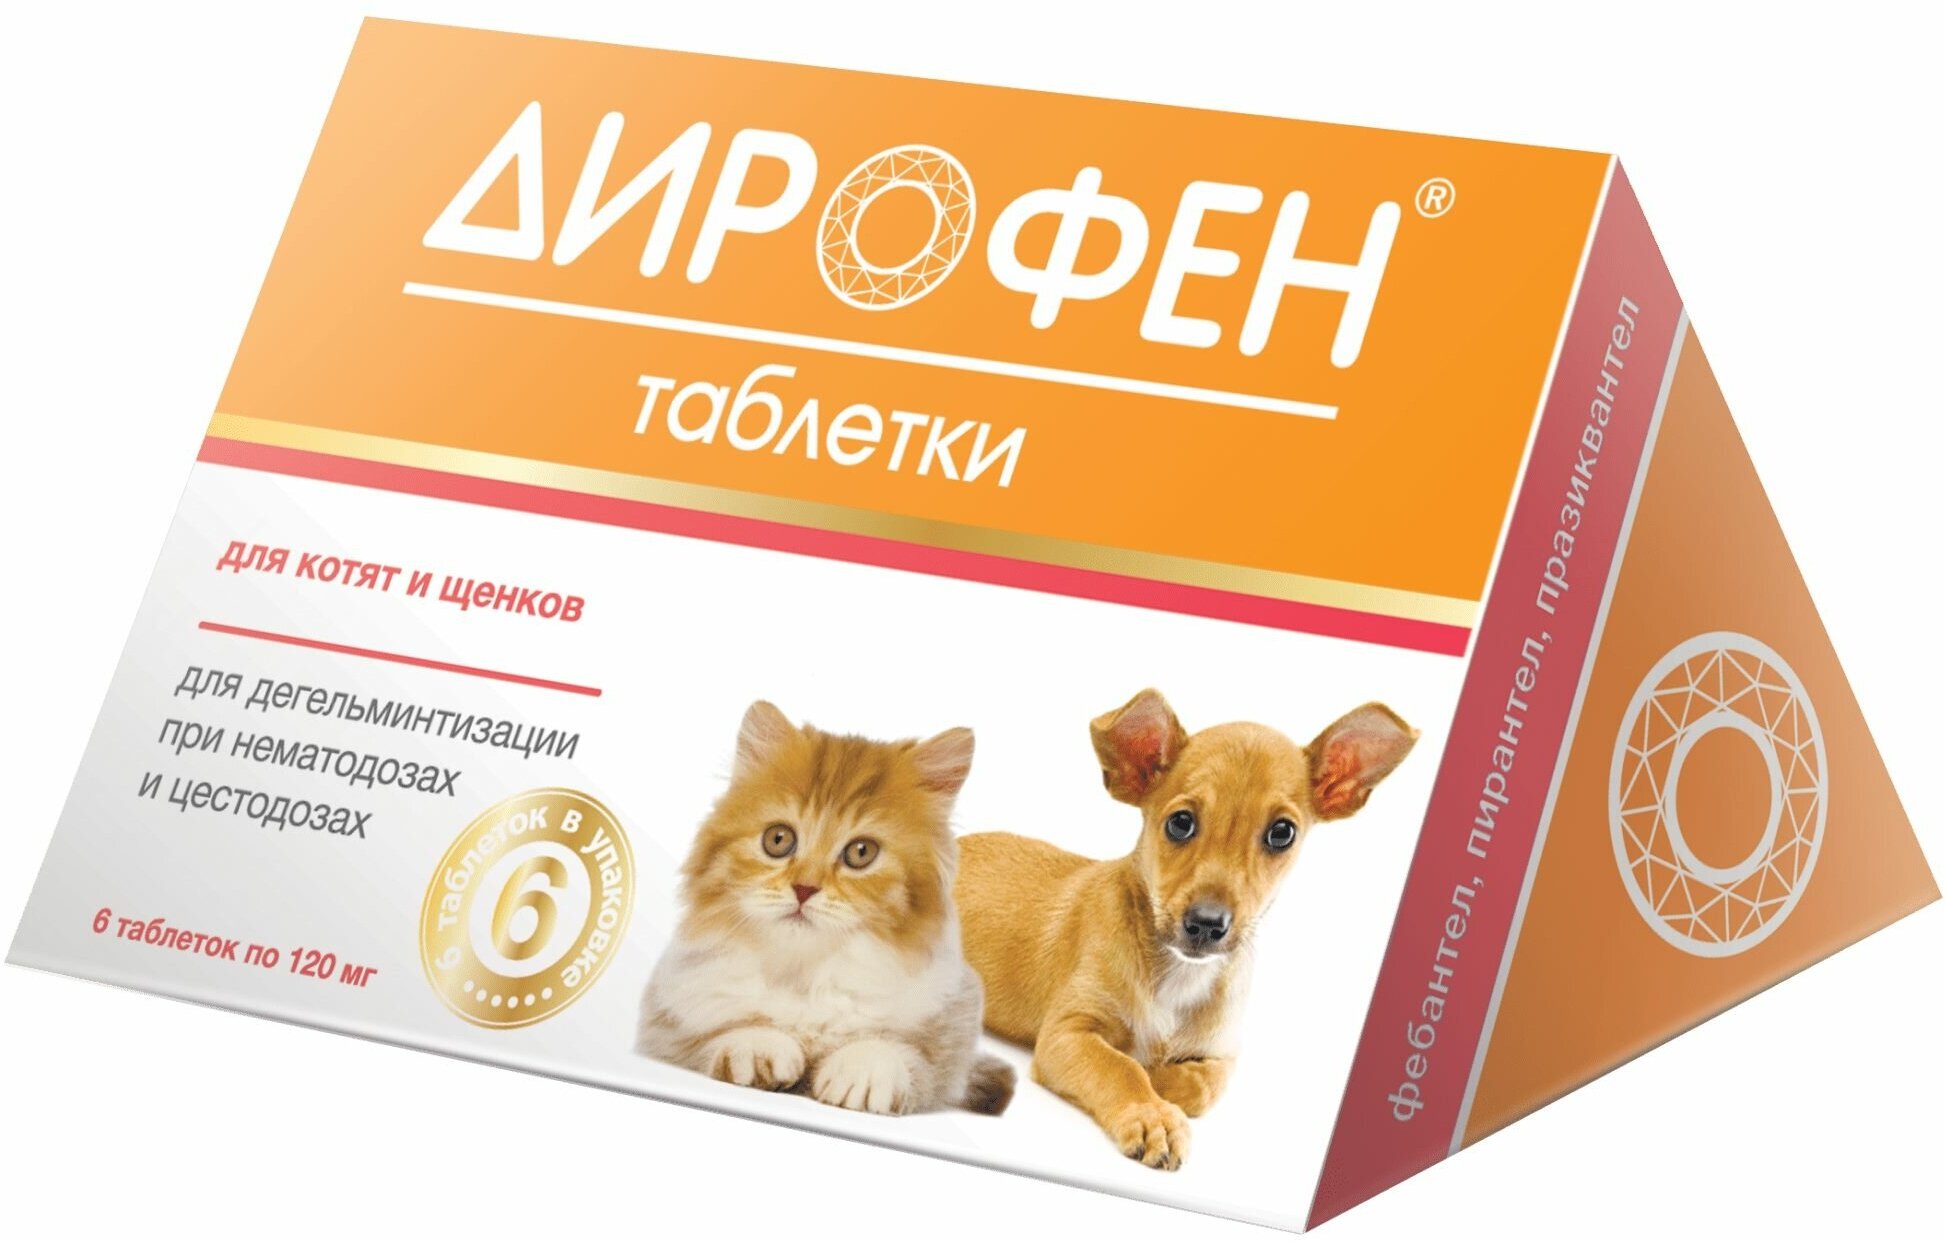 Apicenna Дирофен таблетки для котят и щенков, 6 таб.